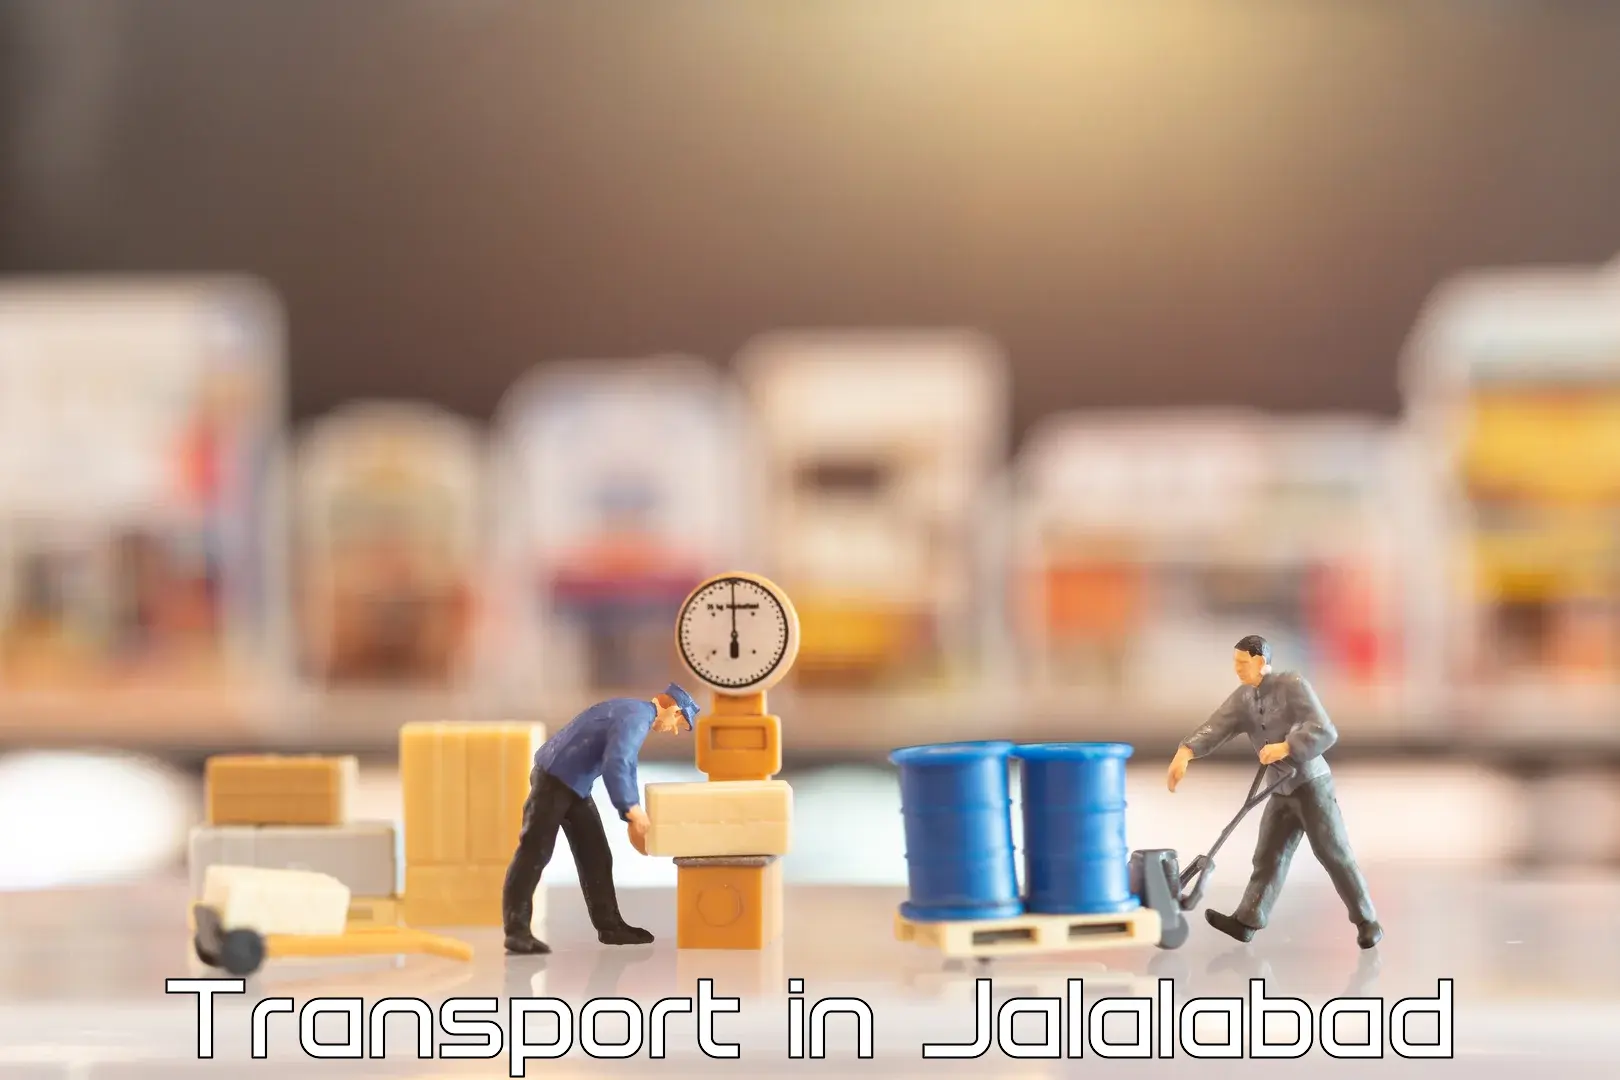 Intercity goods transport in Jalalabad